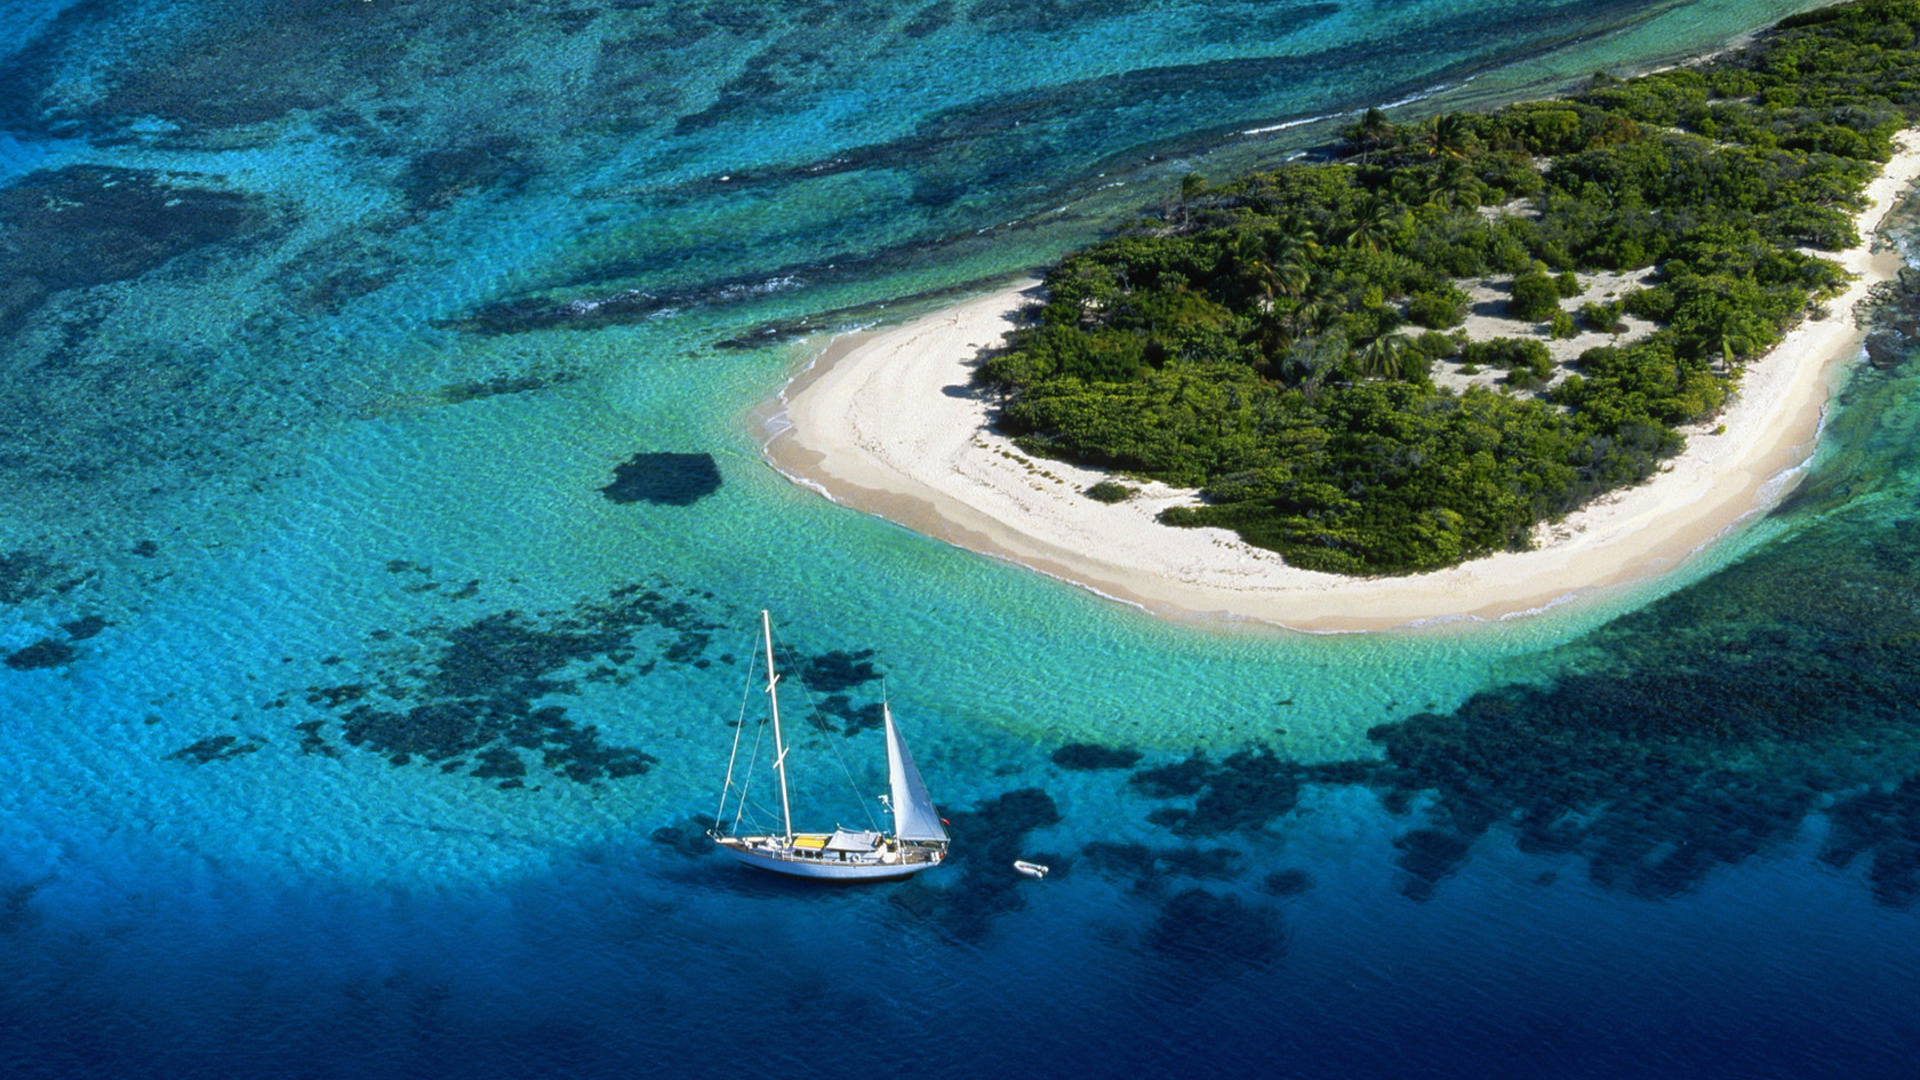 sailboat, island, sea, photography, tropical, beach, boat, landscape, ocean, reef, scenic